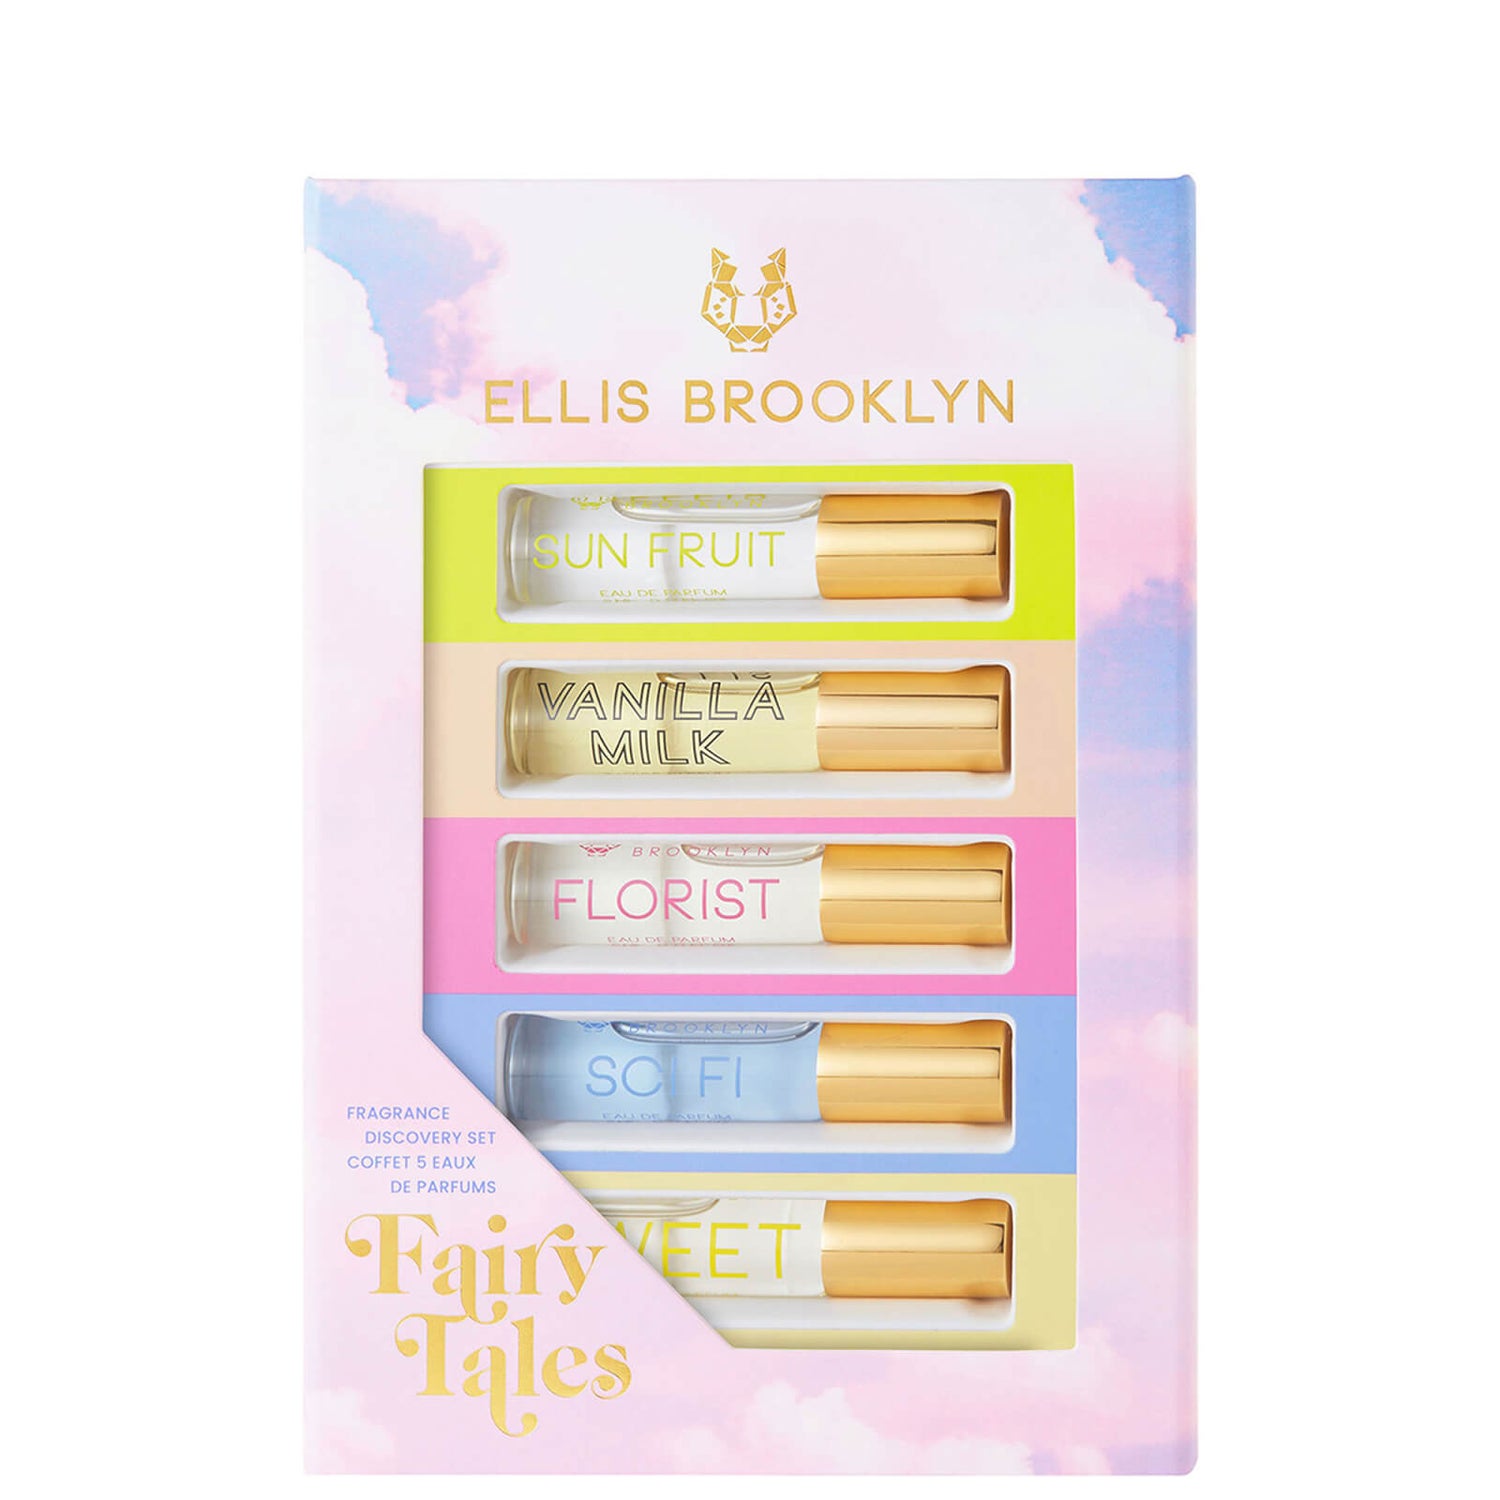 Ellis Brooklyn Fairy Tales Rollerball Eau de Parfum Gift Set (Worth $80.00)  - Dermstore